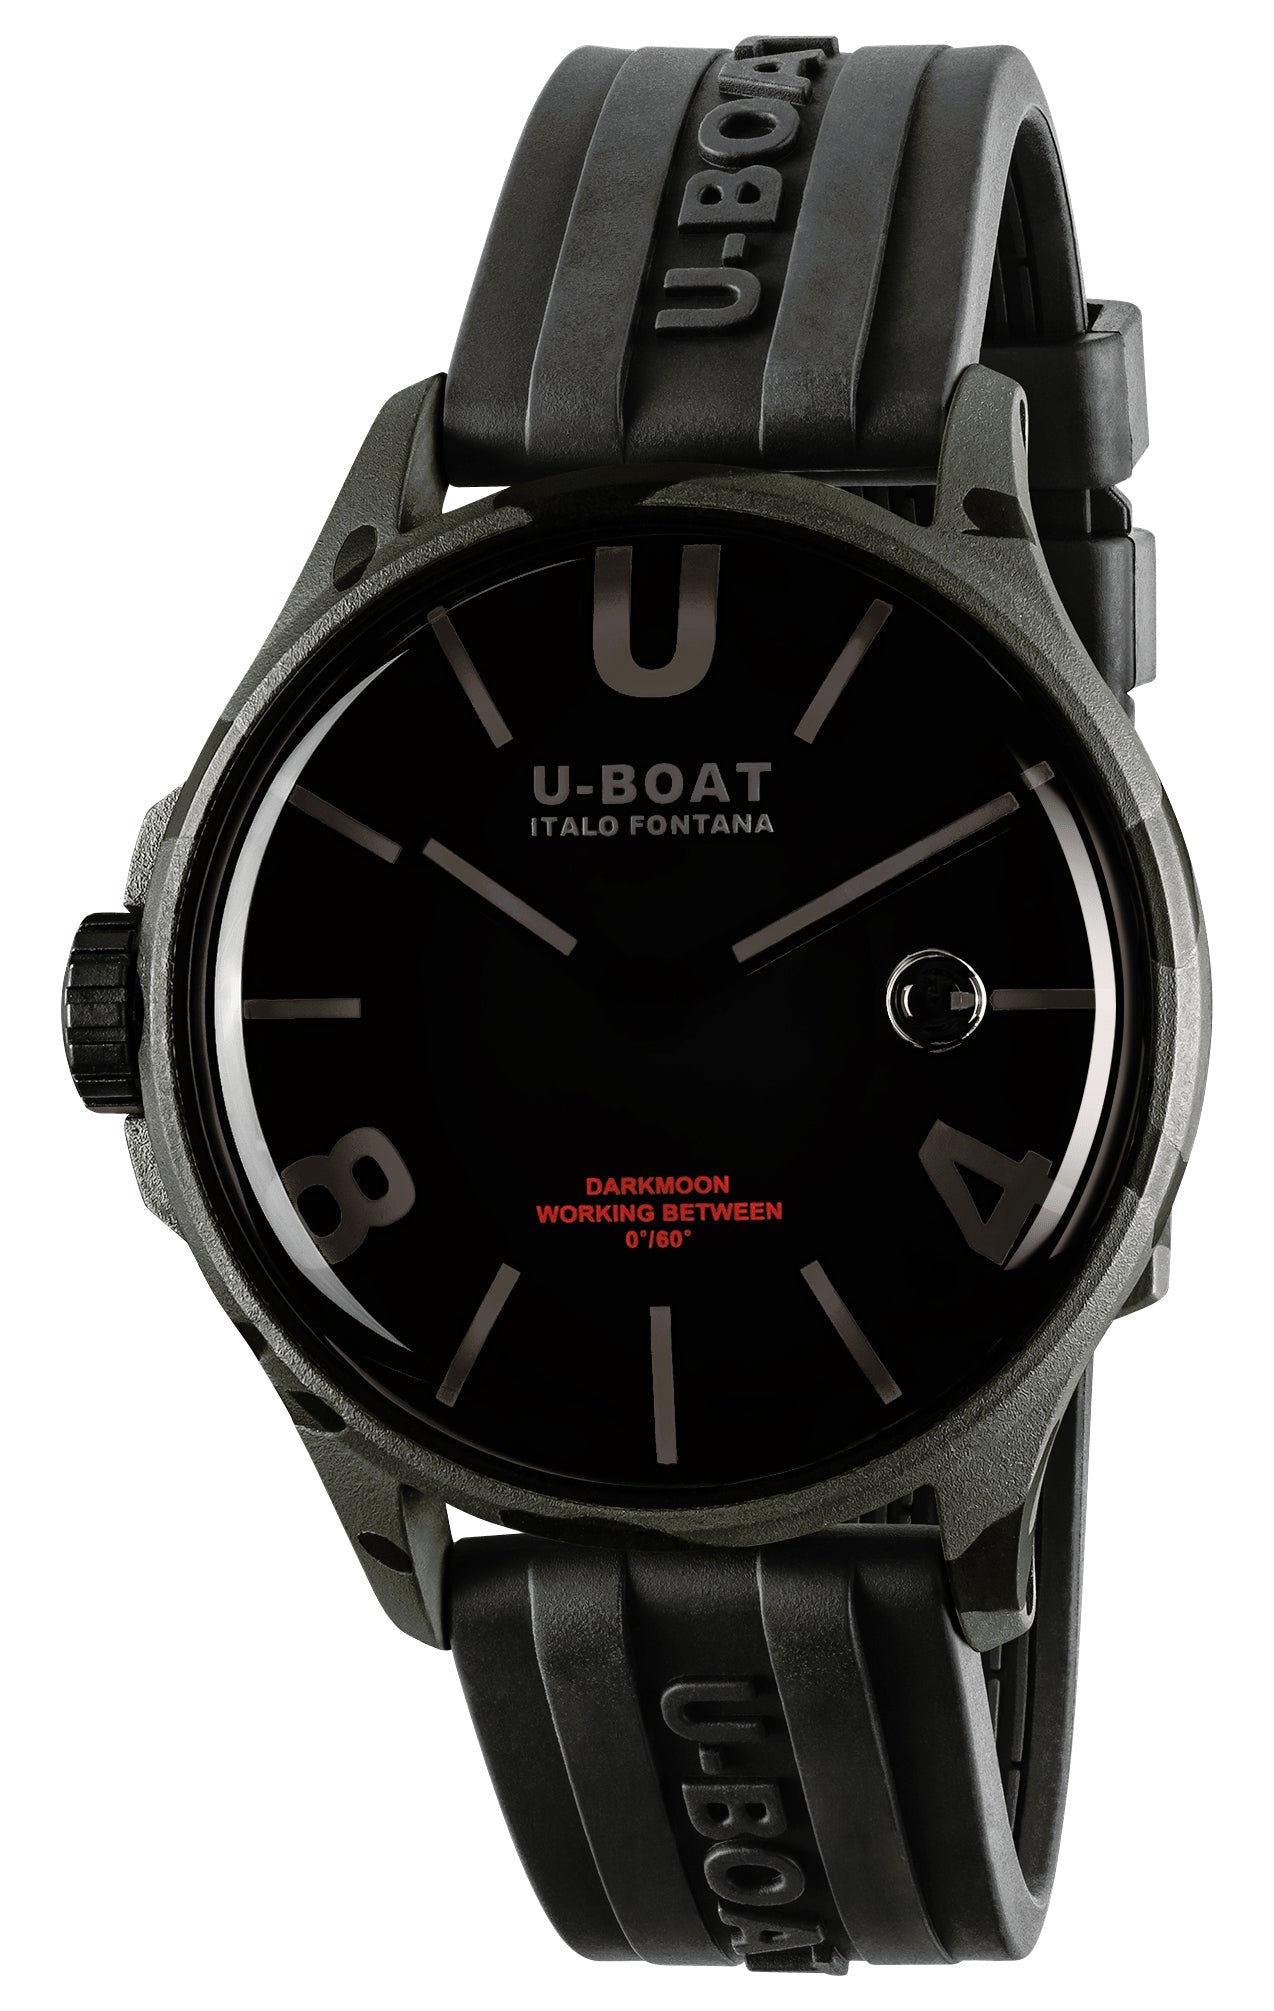 update alt-text with template Watches - Mens-U-Boat-9553-40 - 45 mm, black, black PVD case, Darkmoon, mens, menswatches, new arrivals, round, rpSKU_9526, rpSKU_9538, rpSKU_9544, rpSKU_9546, rpSKU_9548, rubber, swiss quartz, U-Boat, watches-Watches & Beyond